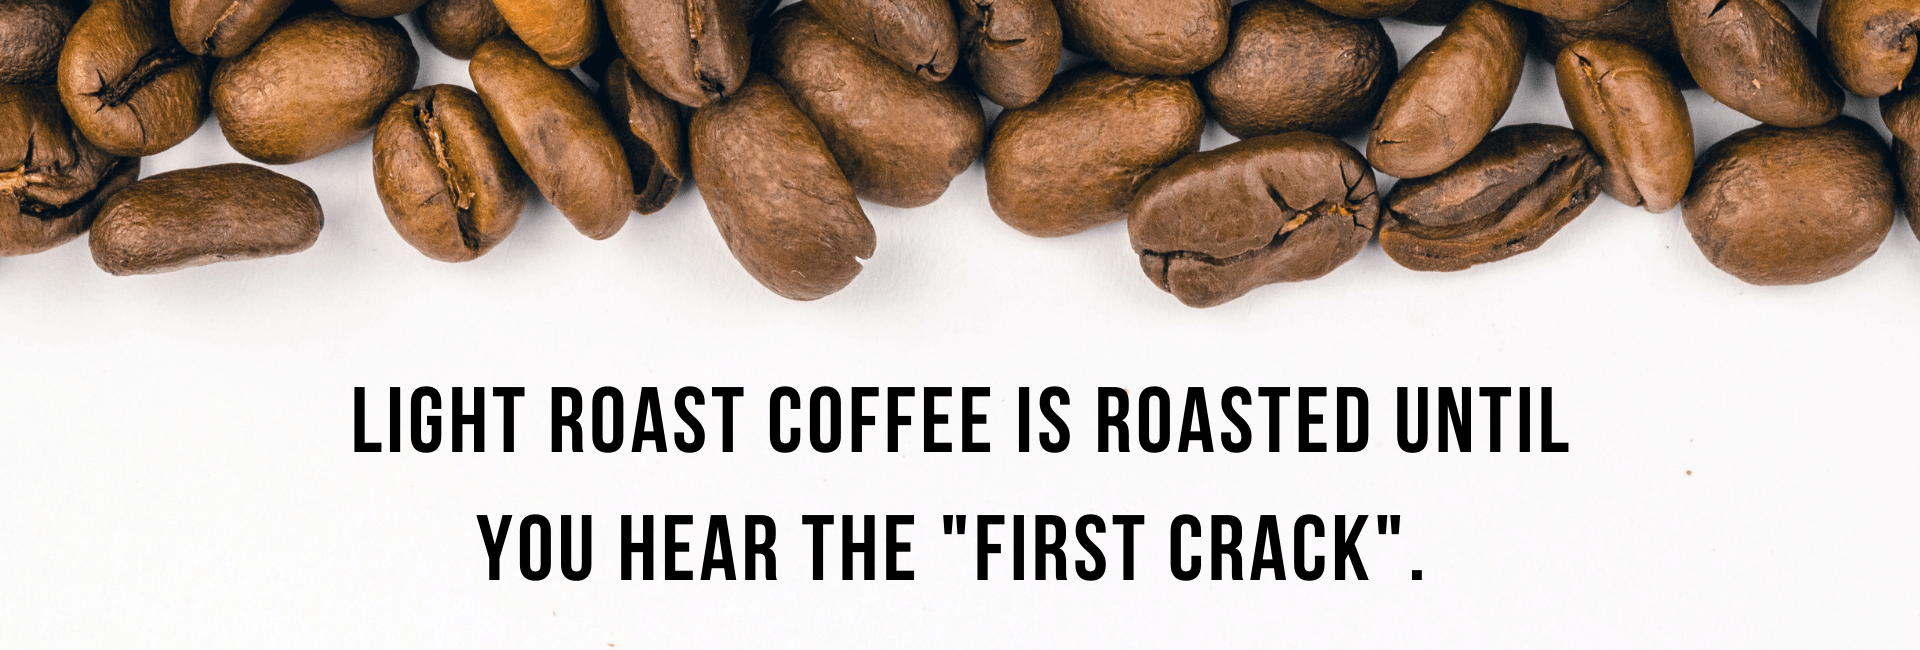 light roast coffee first crack